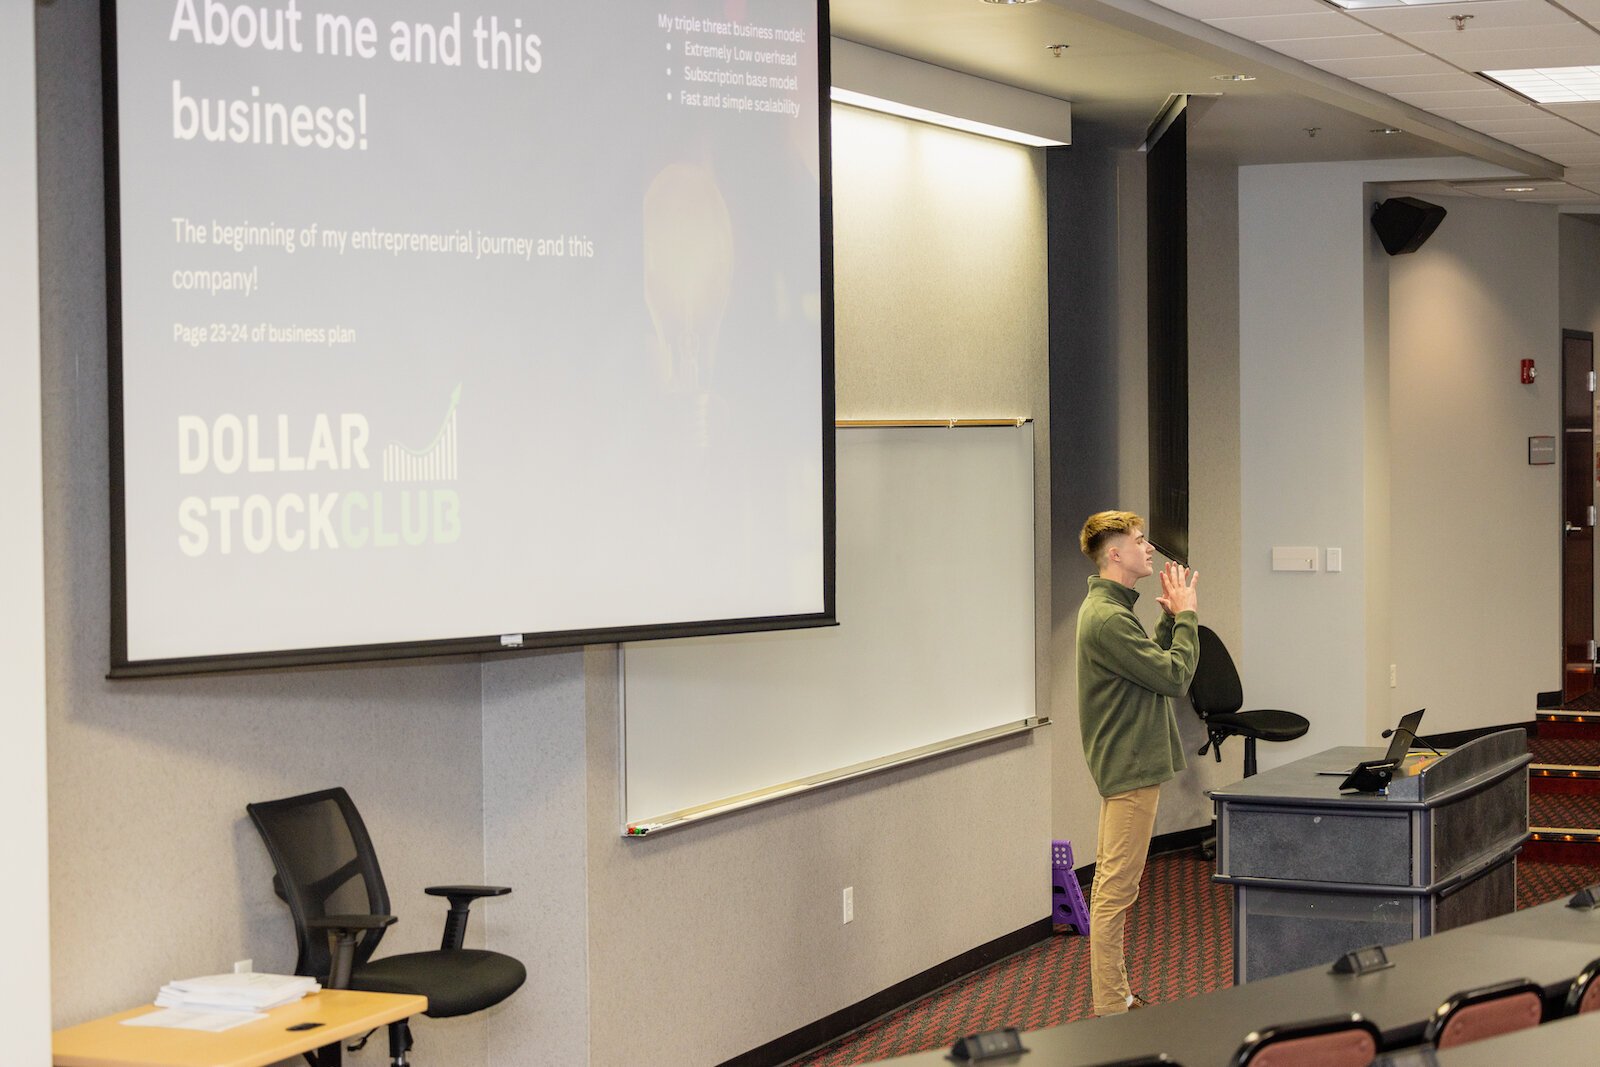 Drew Sigler presents his business, DollarStockClub.